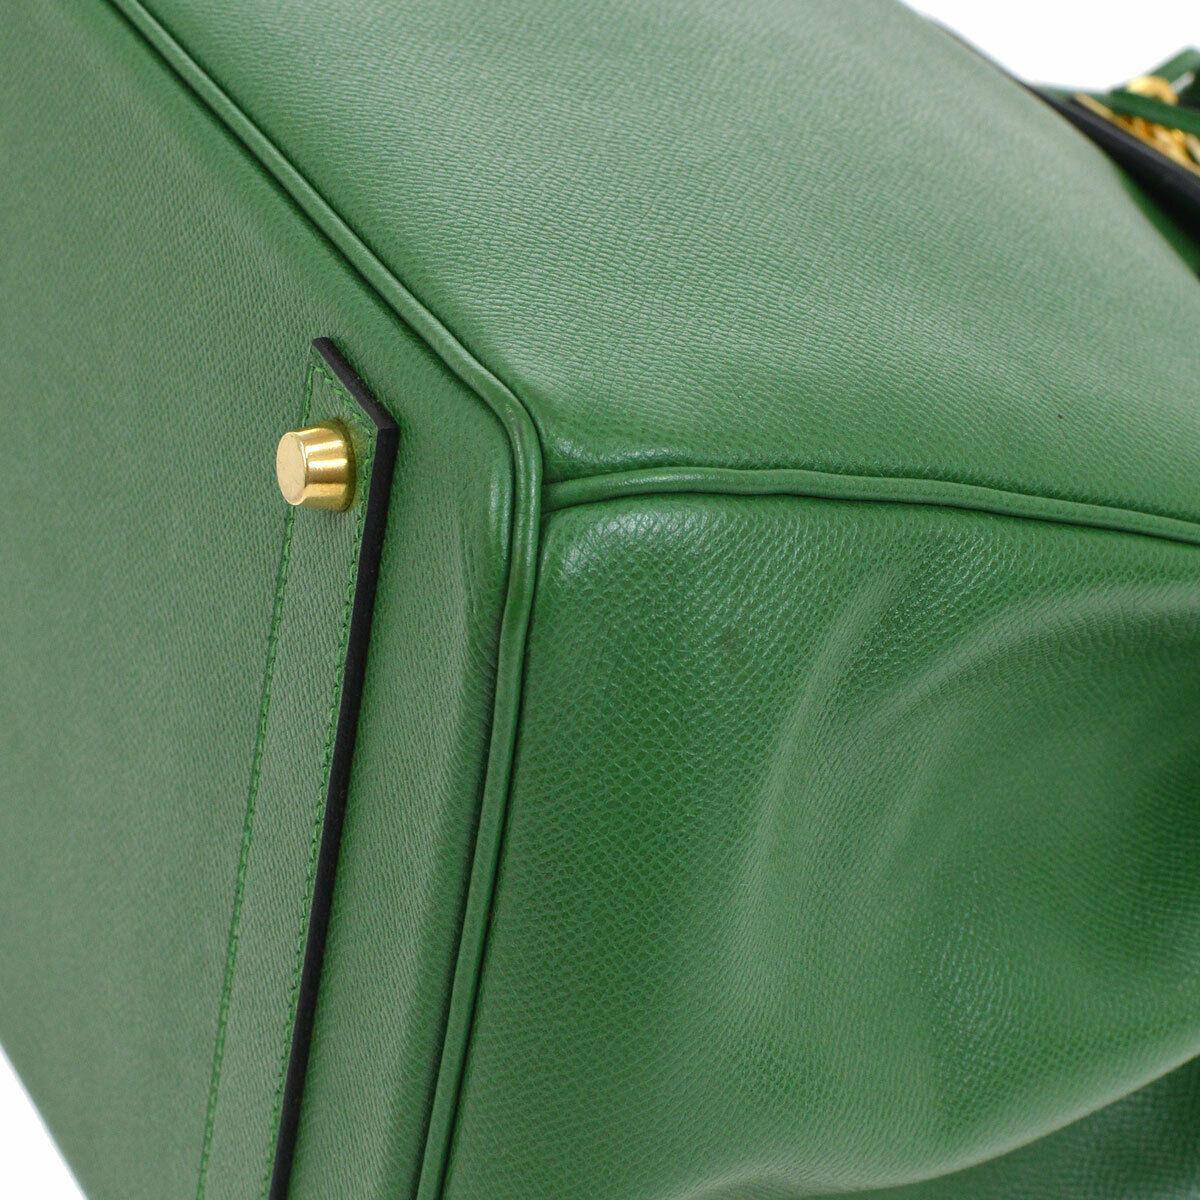 Hermes Birkin 40 Green Leather Gold Carryall Travel Top Handle Satchel Tote Bag 1